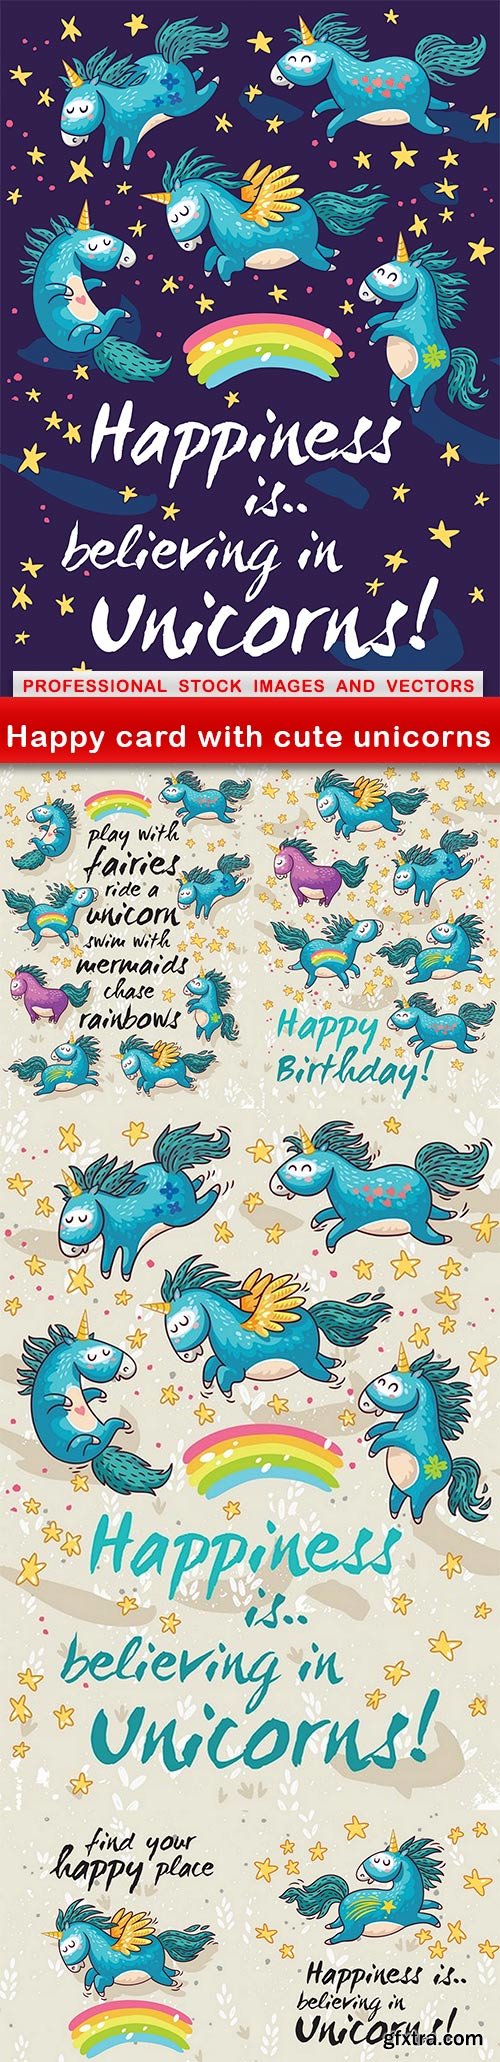 Happy card with cute unicorns - 6 EPS